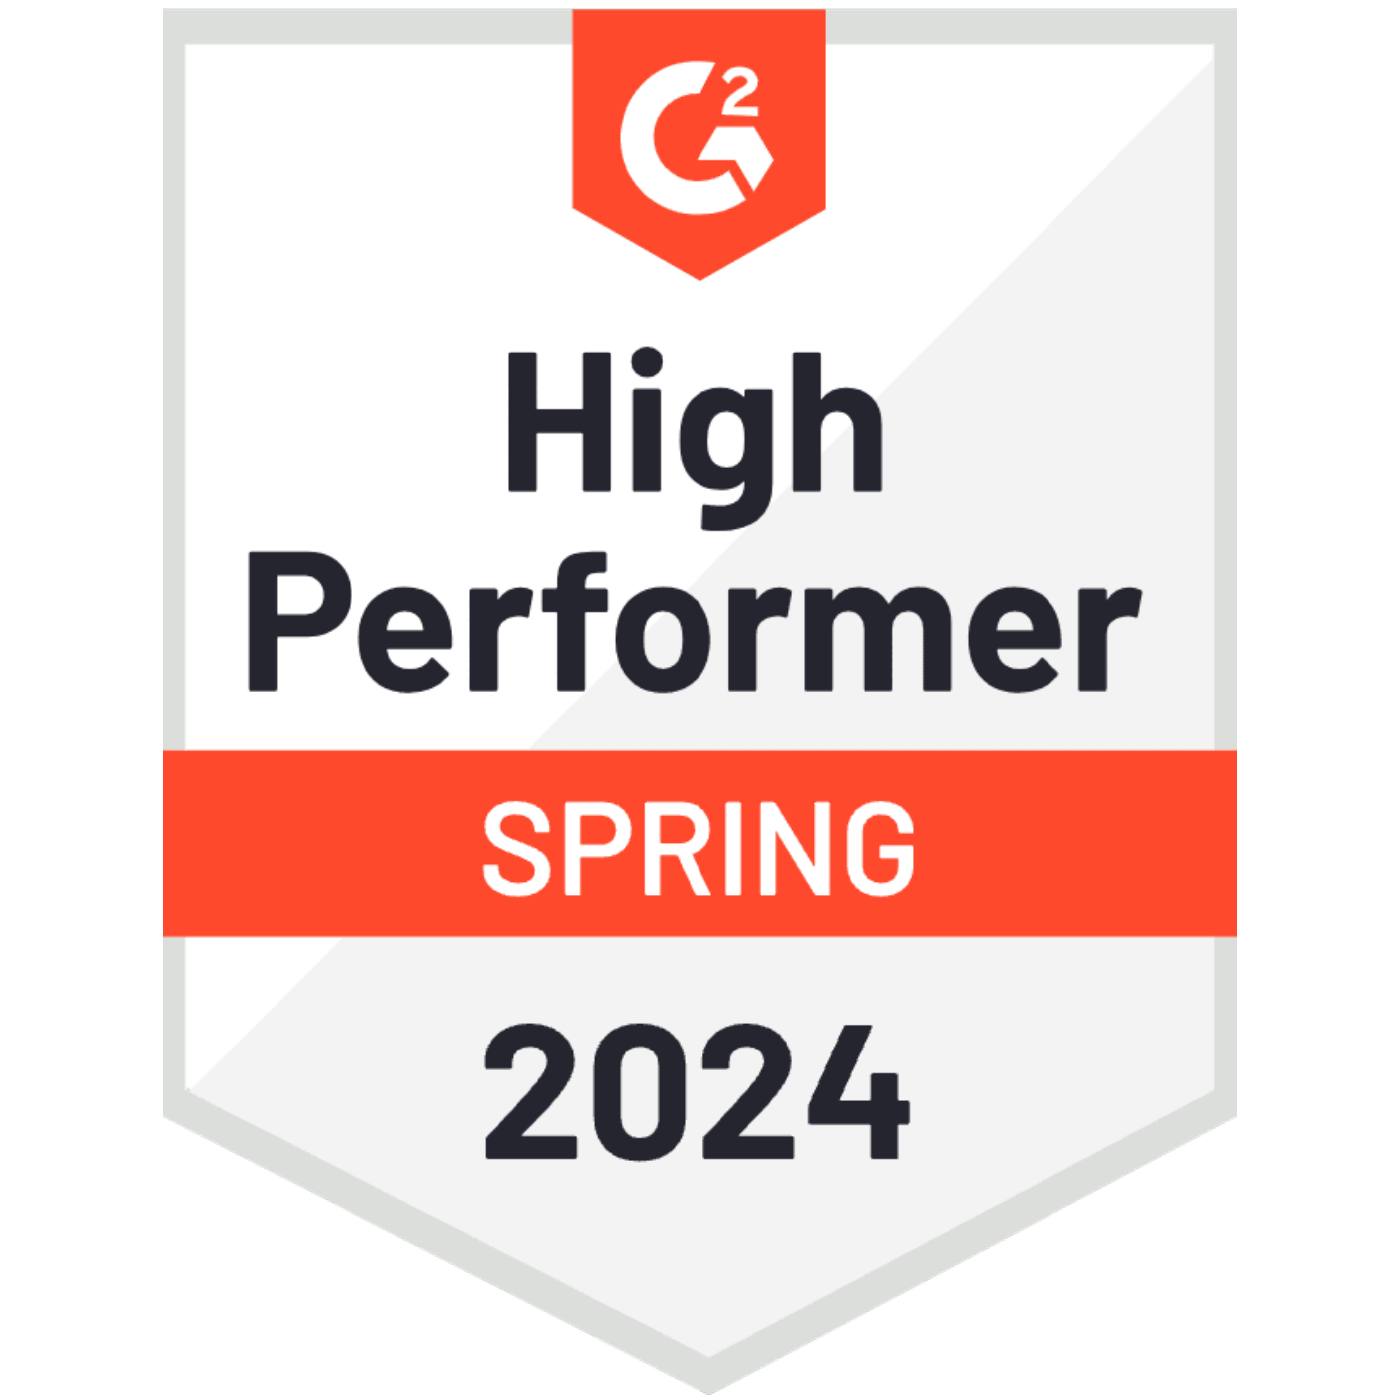 G2_High_Performer_Spring_2024_600_600